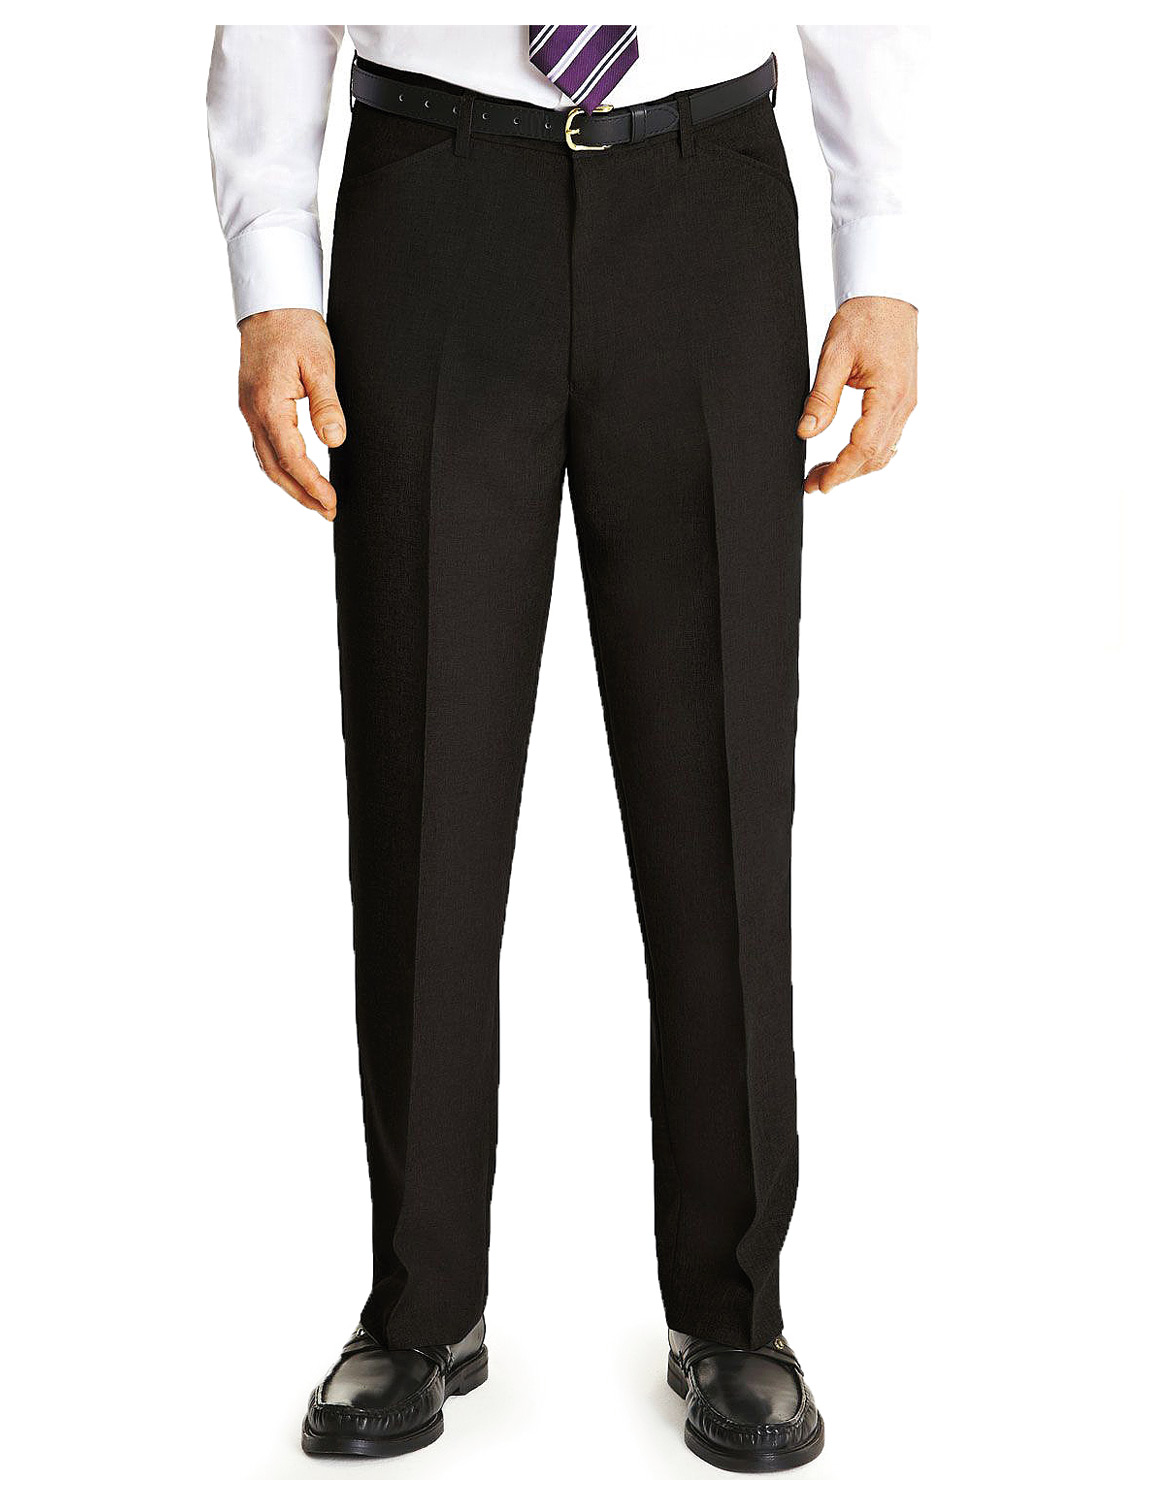 Mens Formal Trouser Quality Farah Supreme Smart Pants | eBay